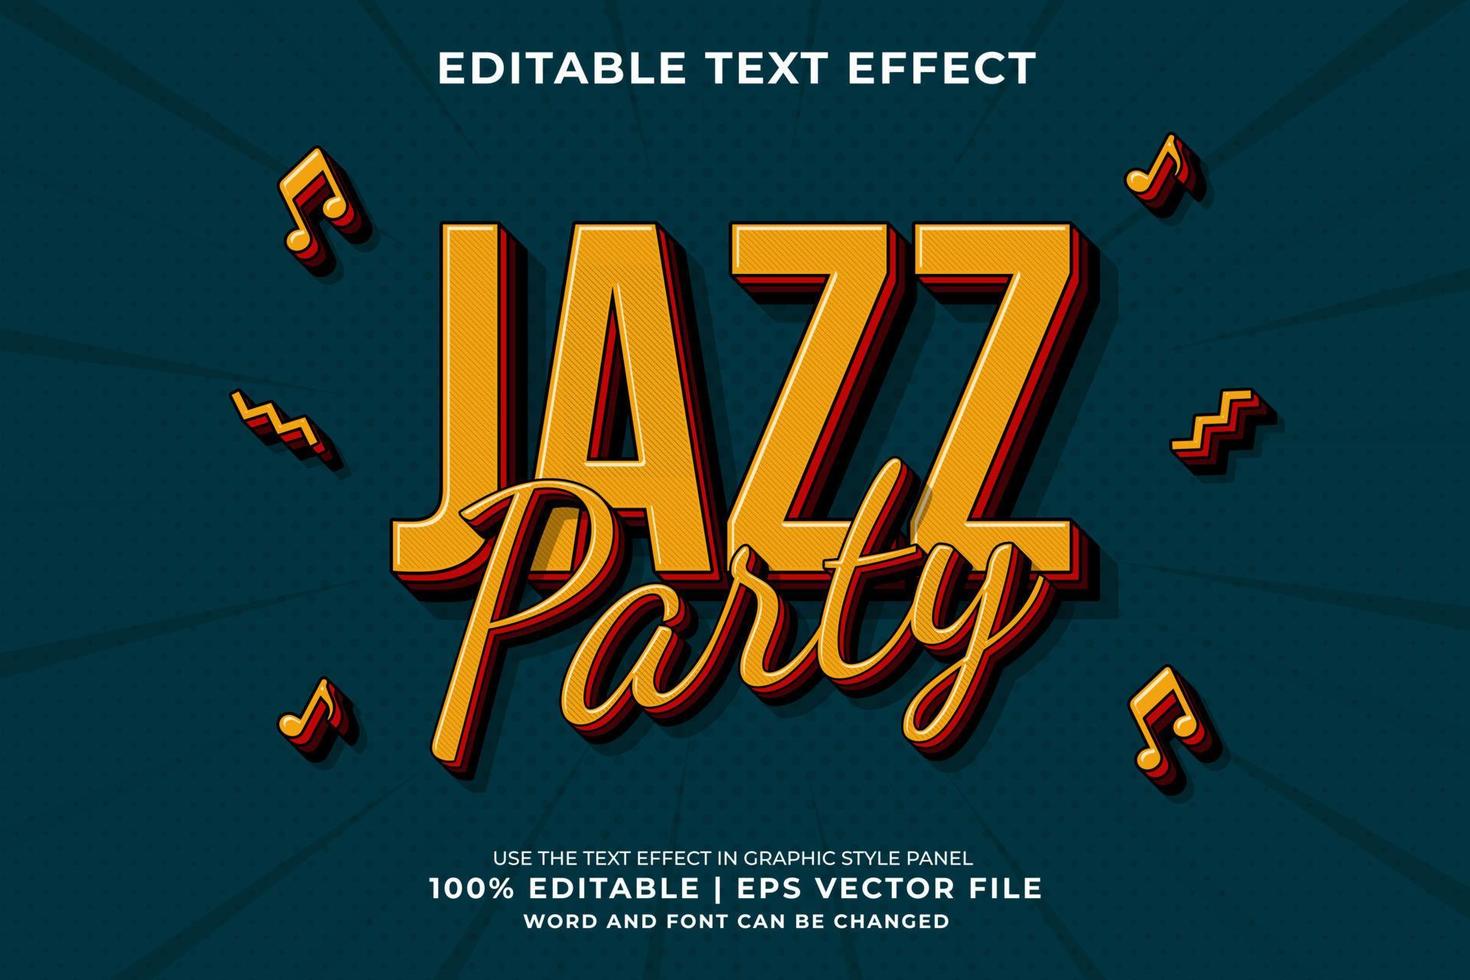 Editable text effect - Jazz Party Retro template style premium vector